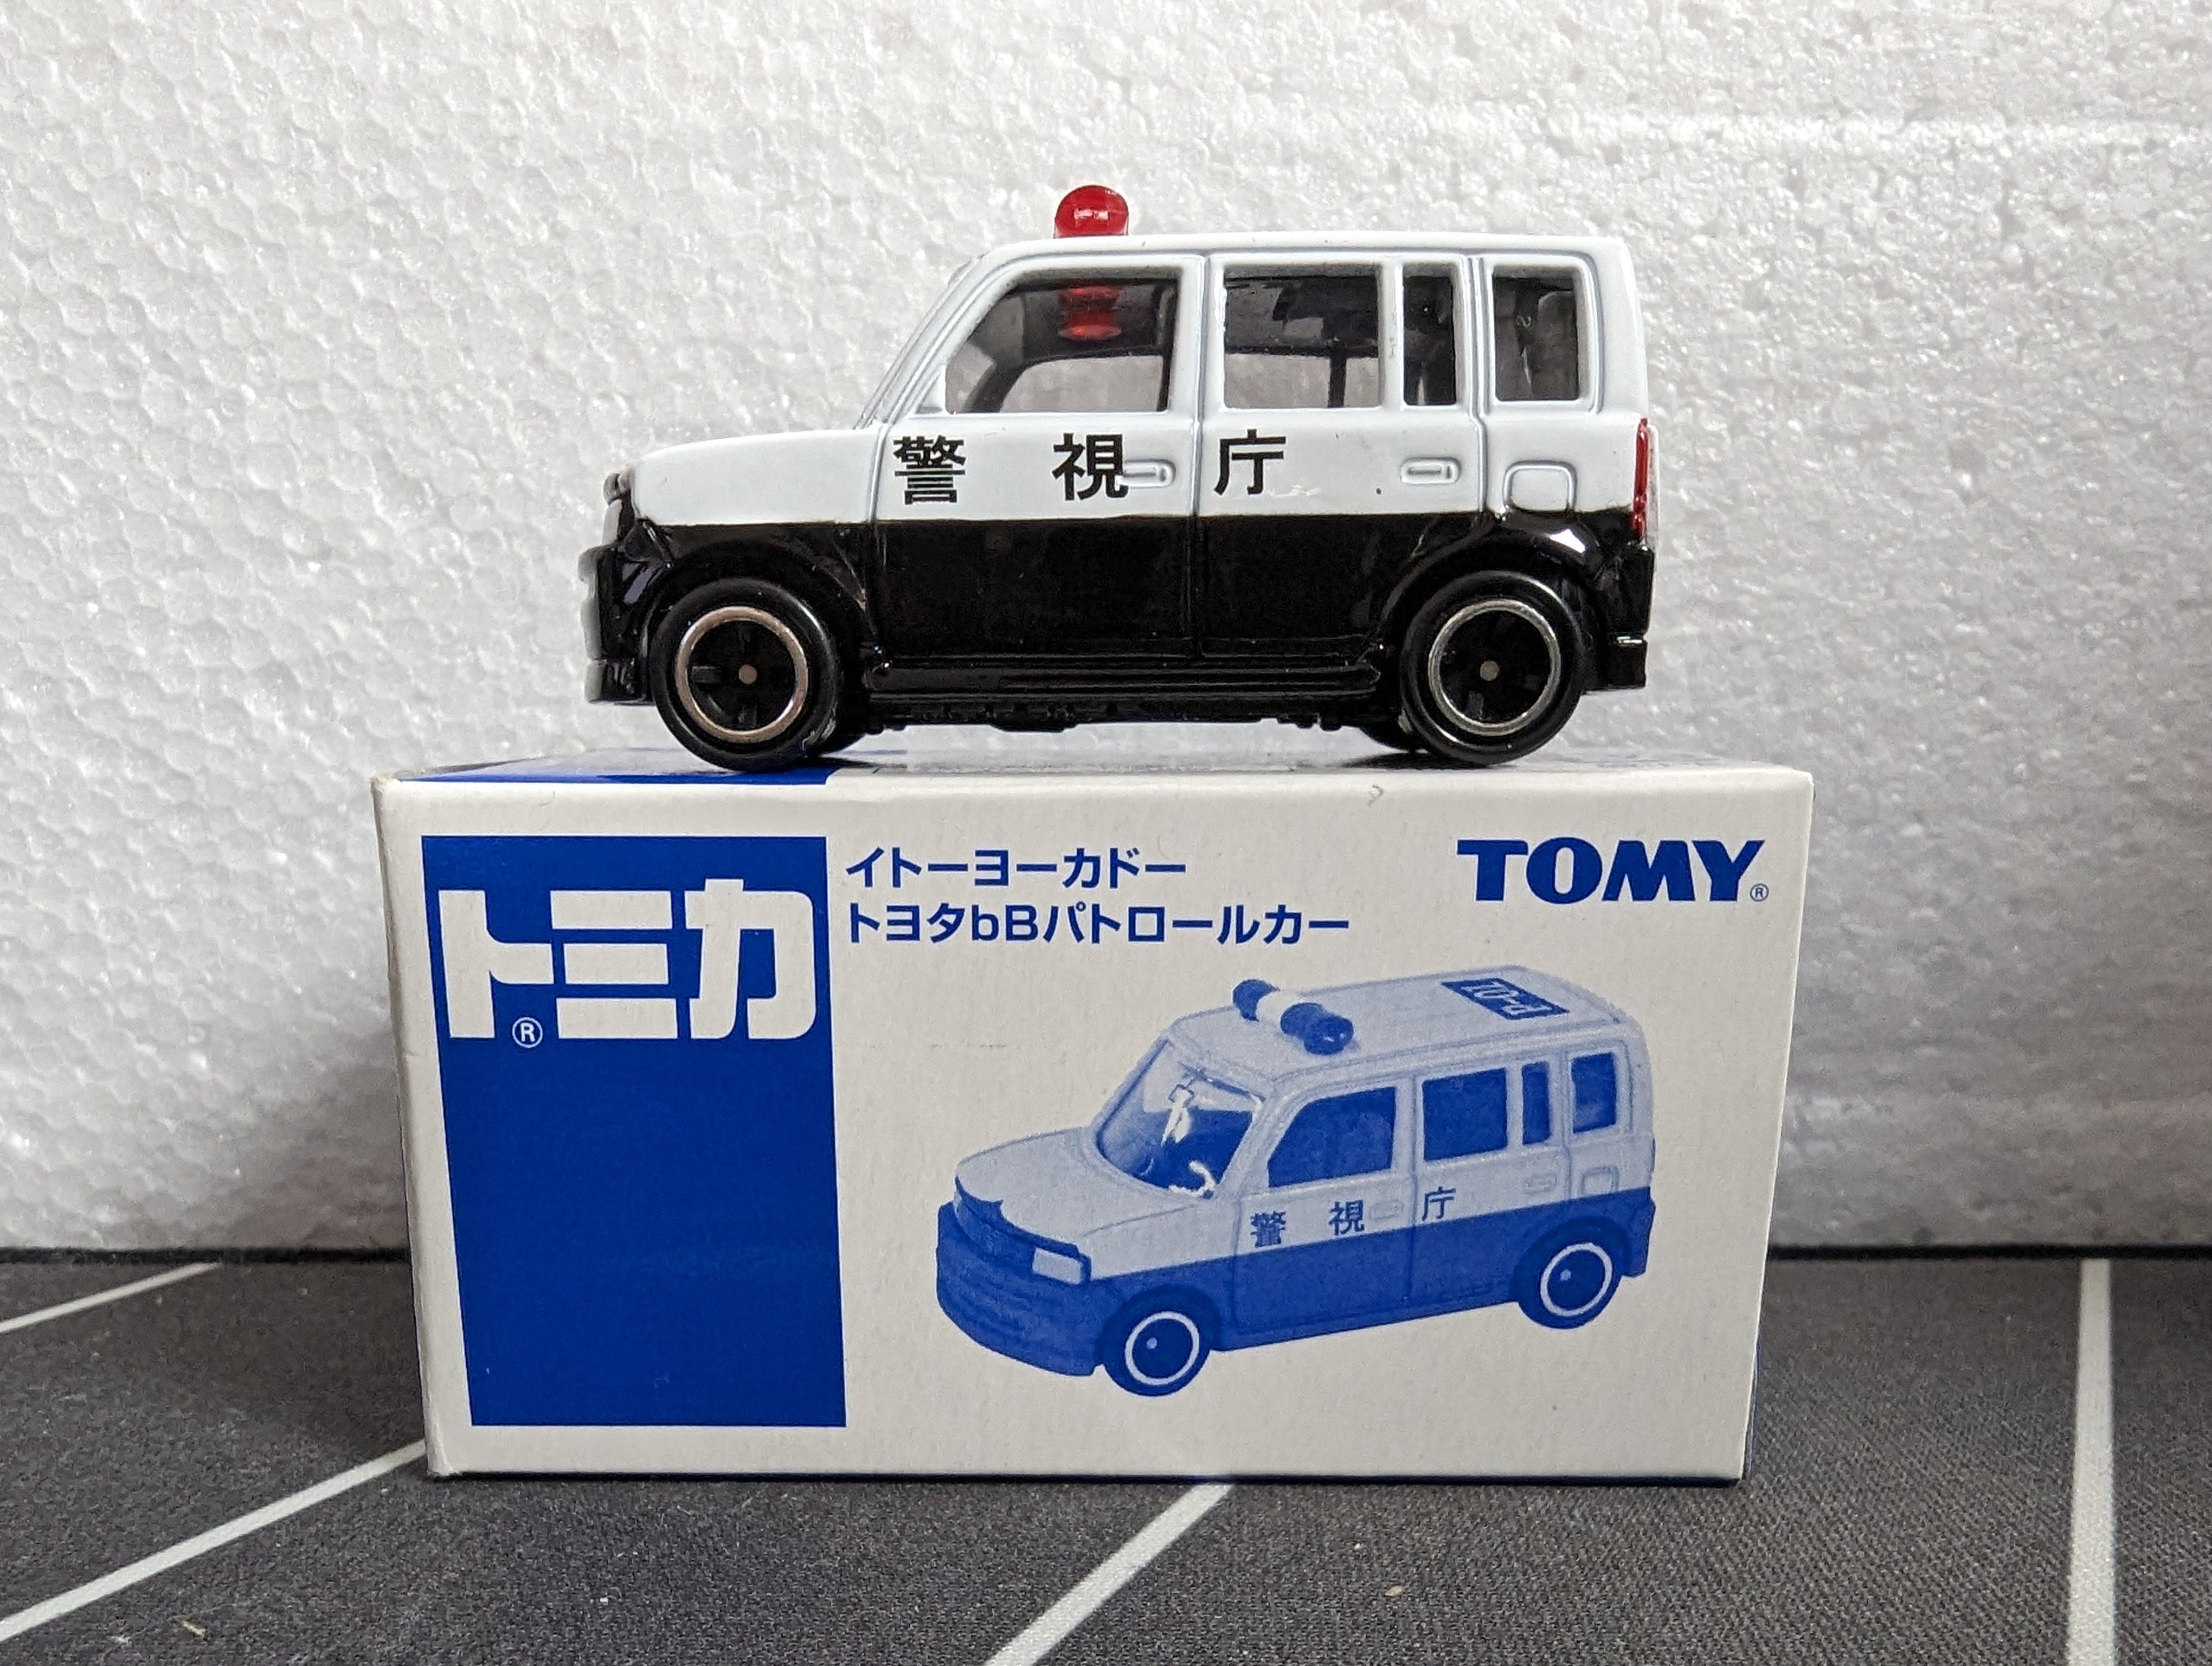 Tomica x Ito-Yokado Toyota bB Patrol Car – Mobile Garage HK